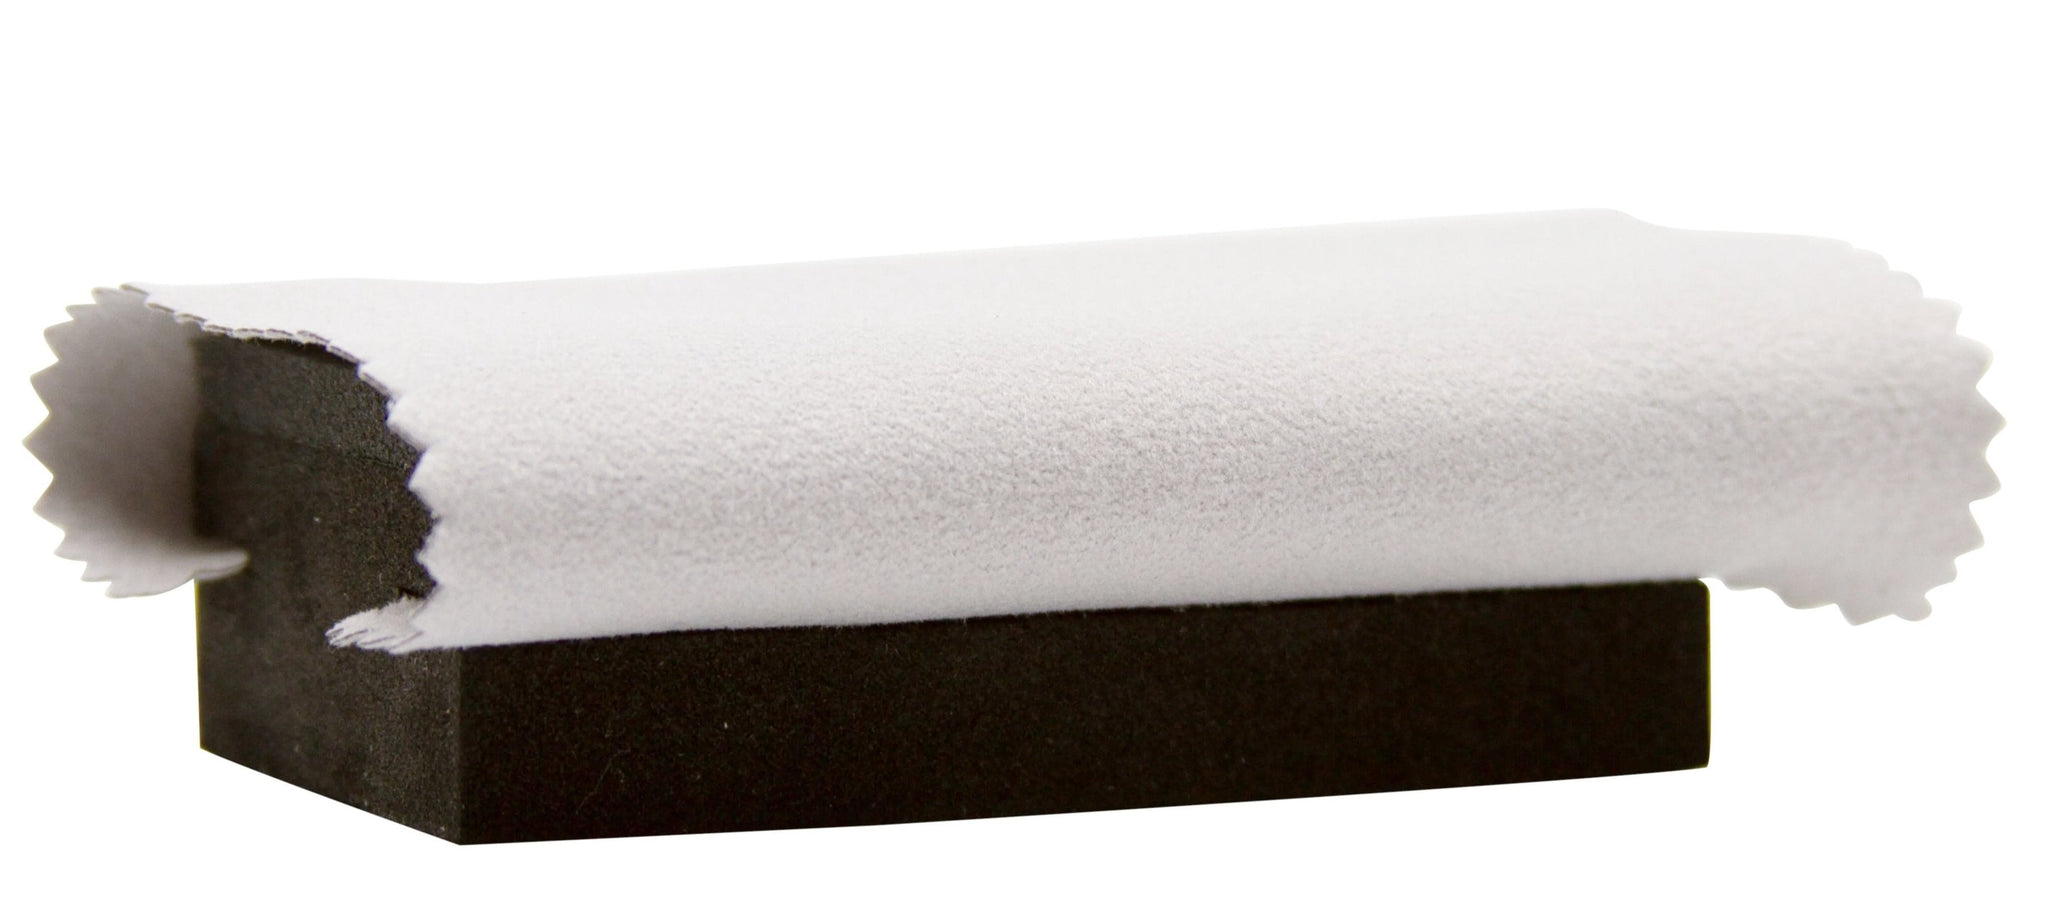 Ceramic coating foam block with microfiber cloth